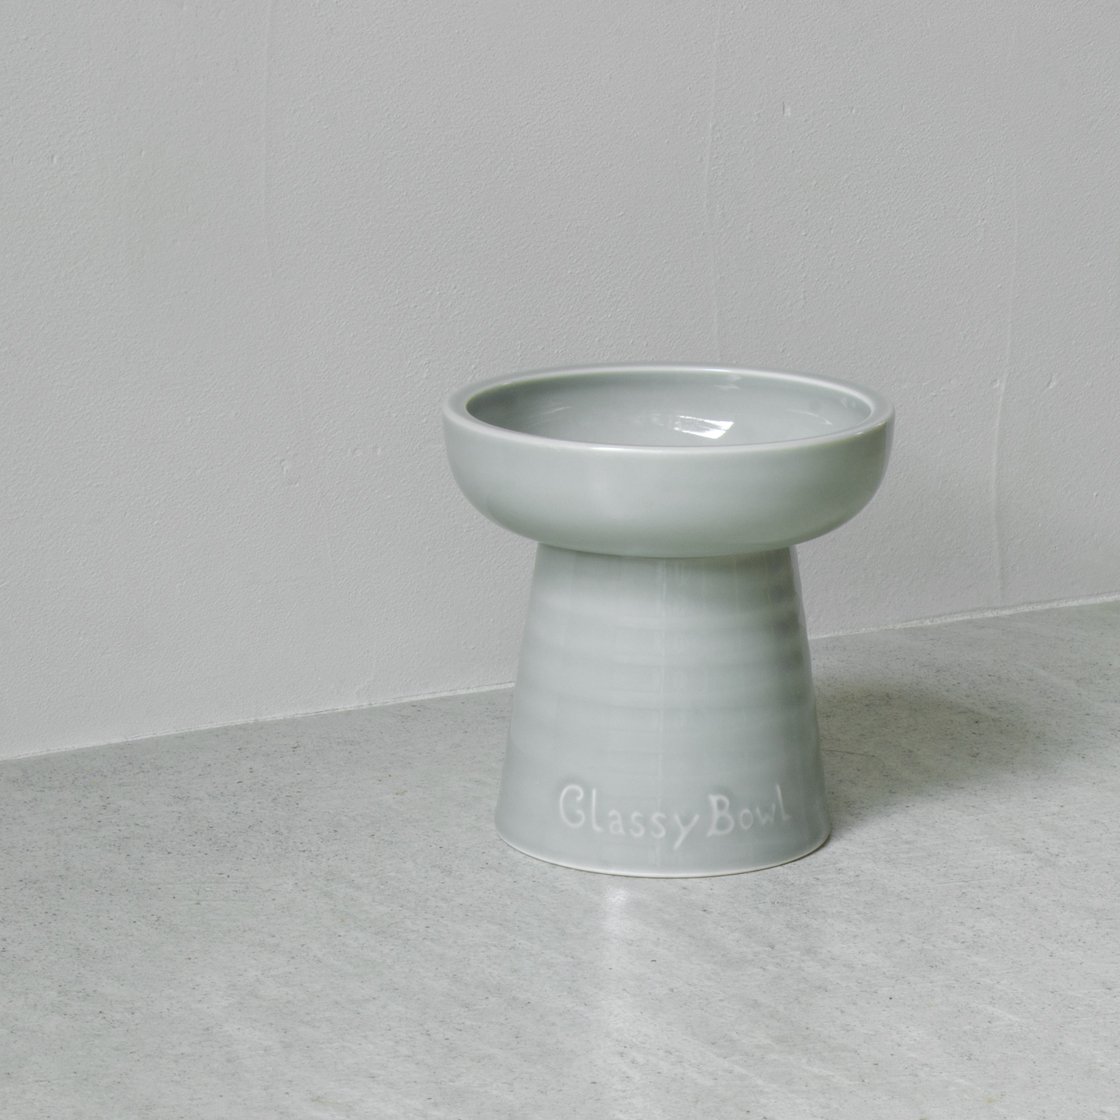 Classy Bowl【5インチ】ライトグレー Made in Japan